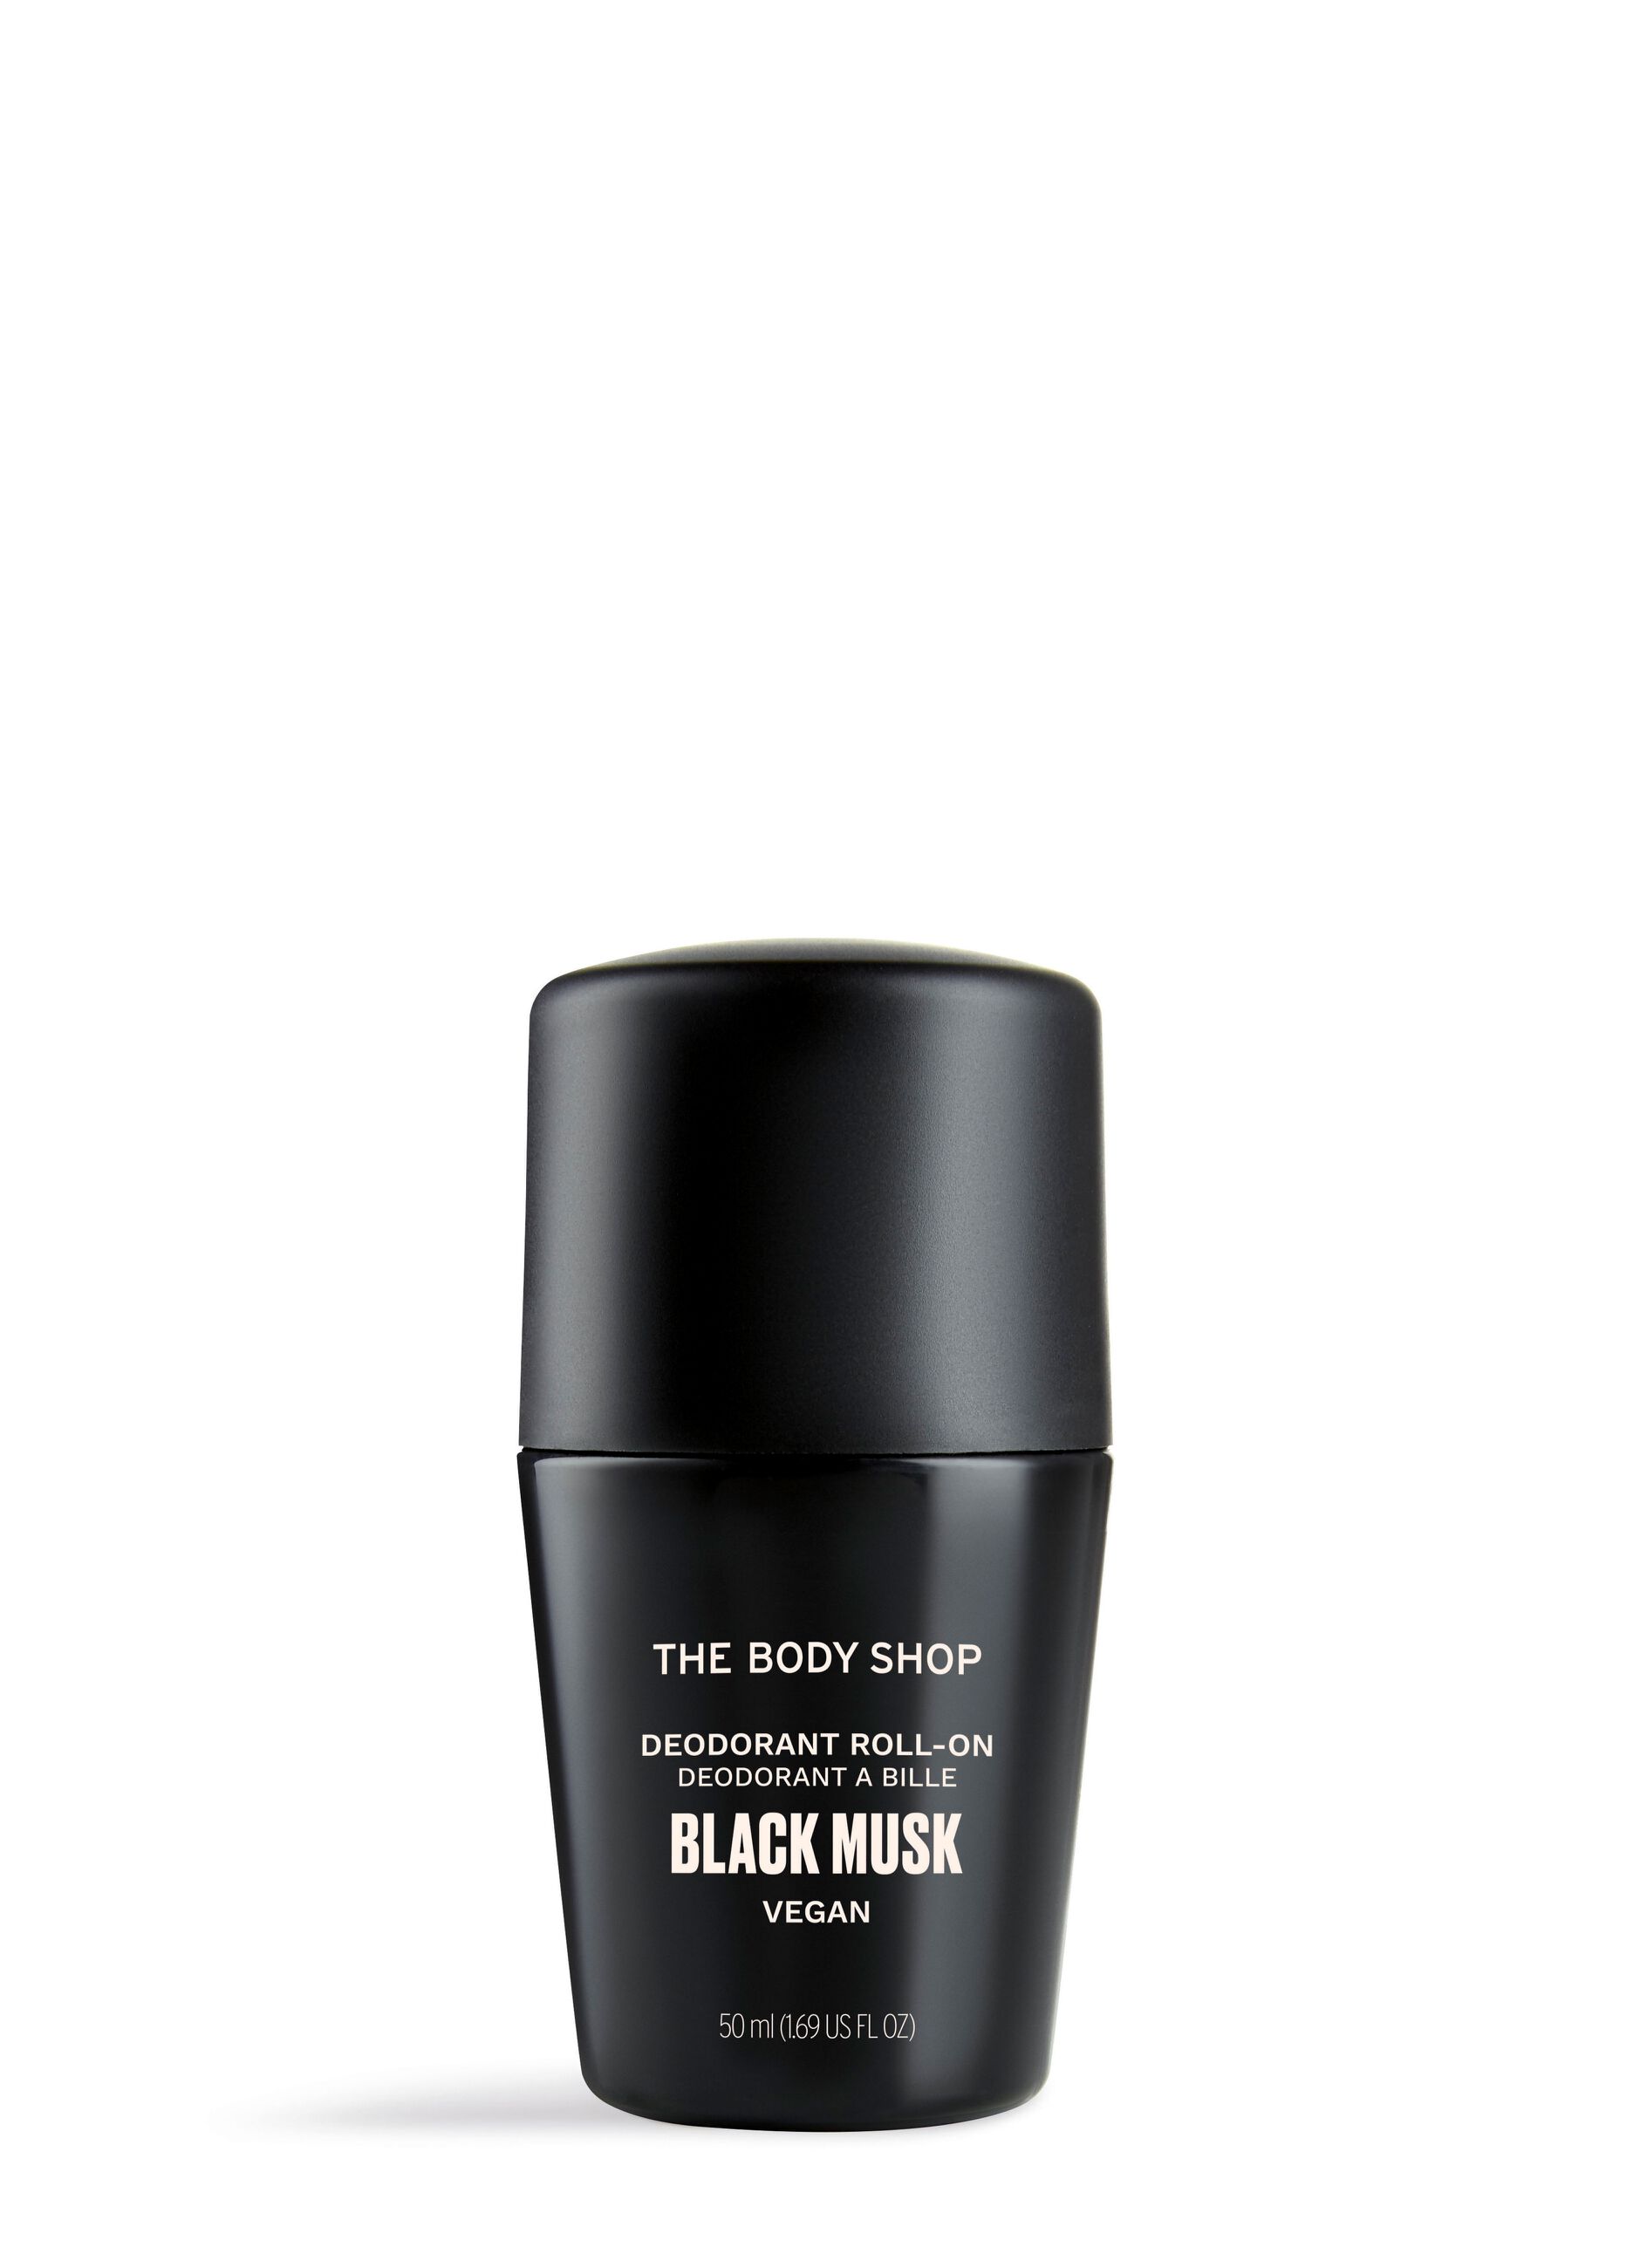 The Body Shop Black Musk deodorant